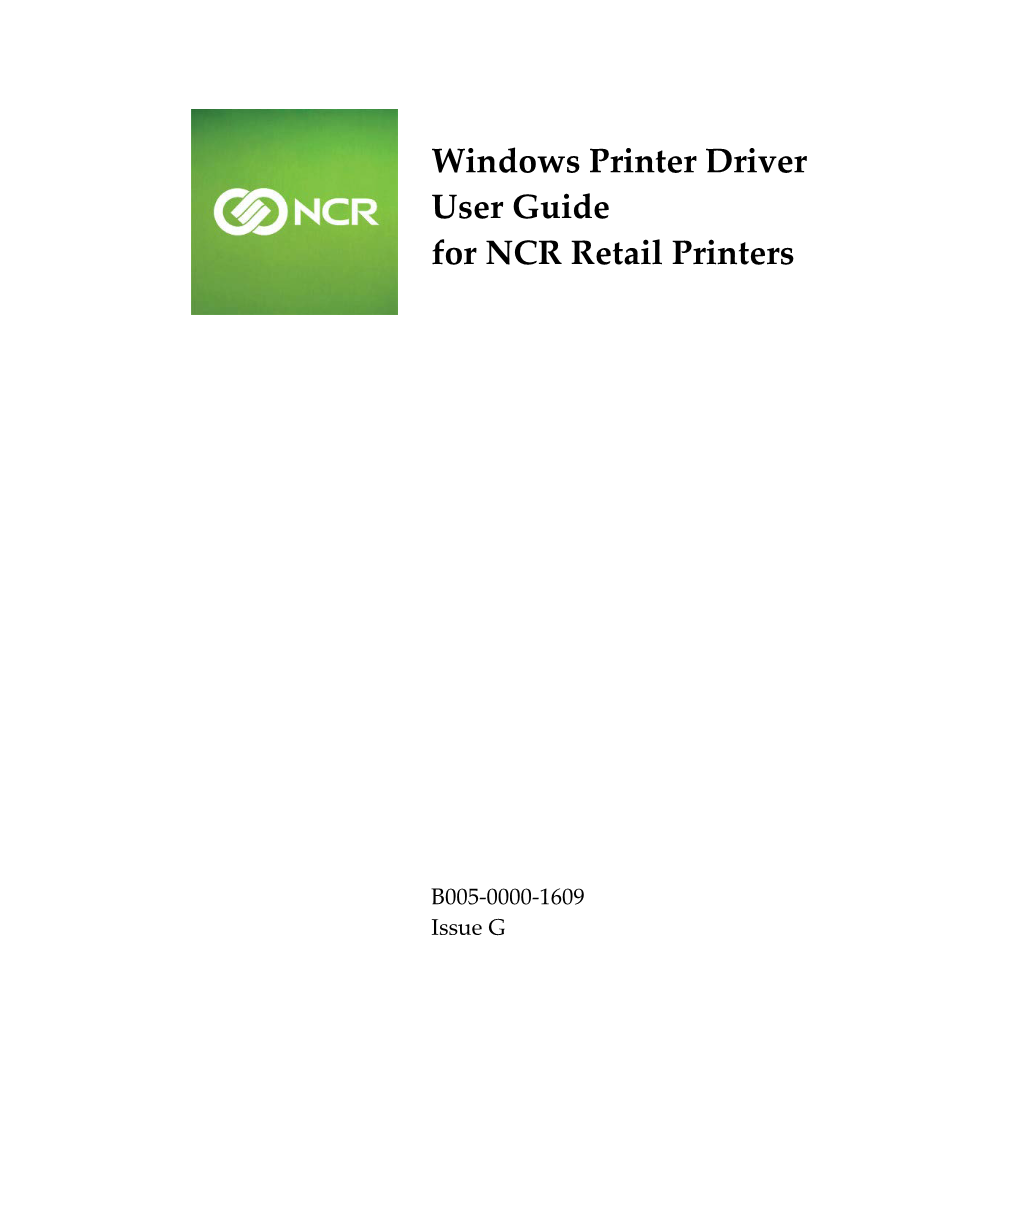 Windows Printer Driver User Guide for NCR Retail Printers